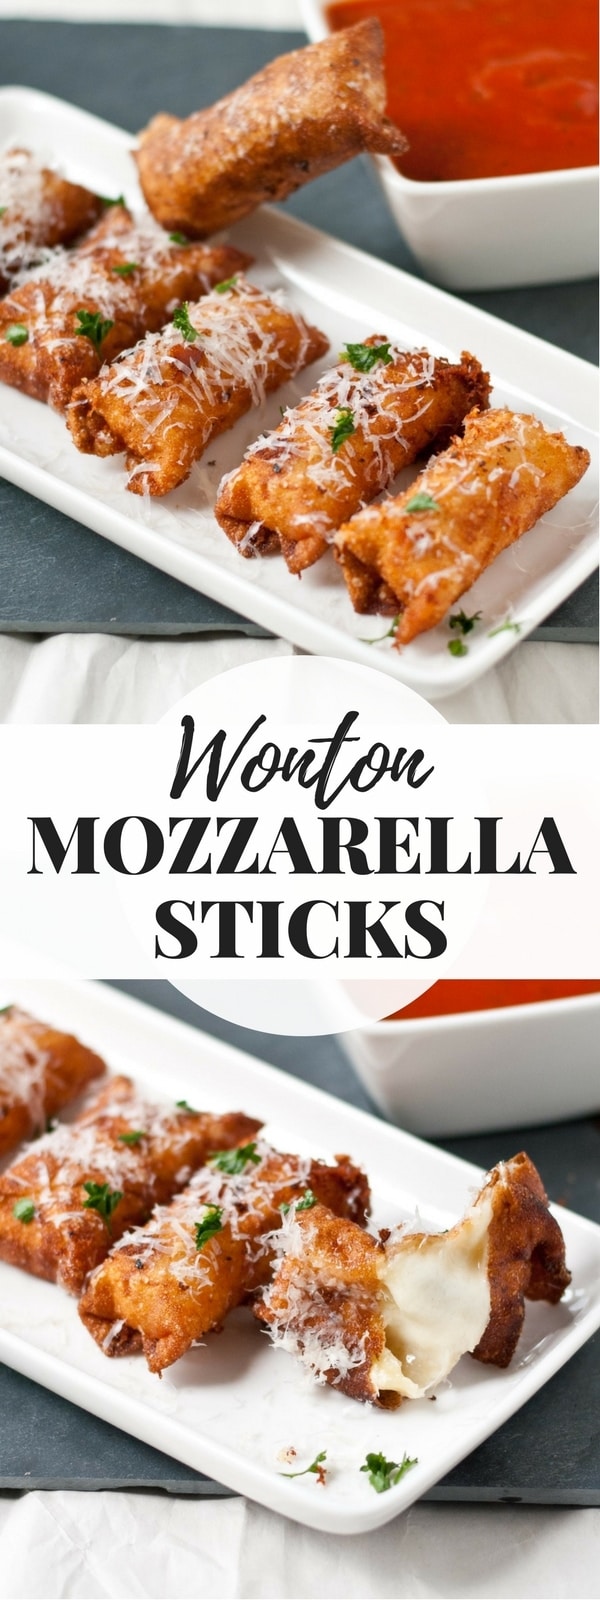 Wonton Mozzarella Sticks dipped in marinara sauce